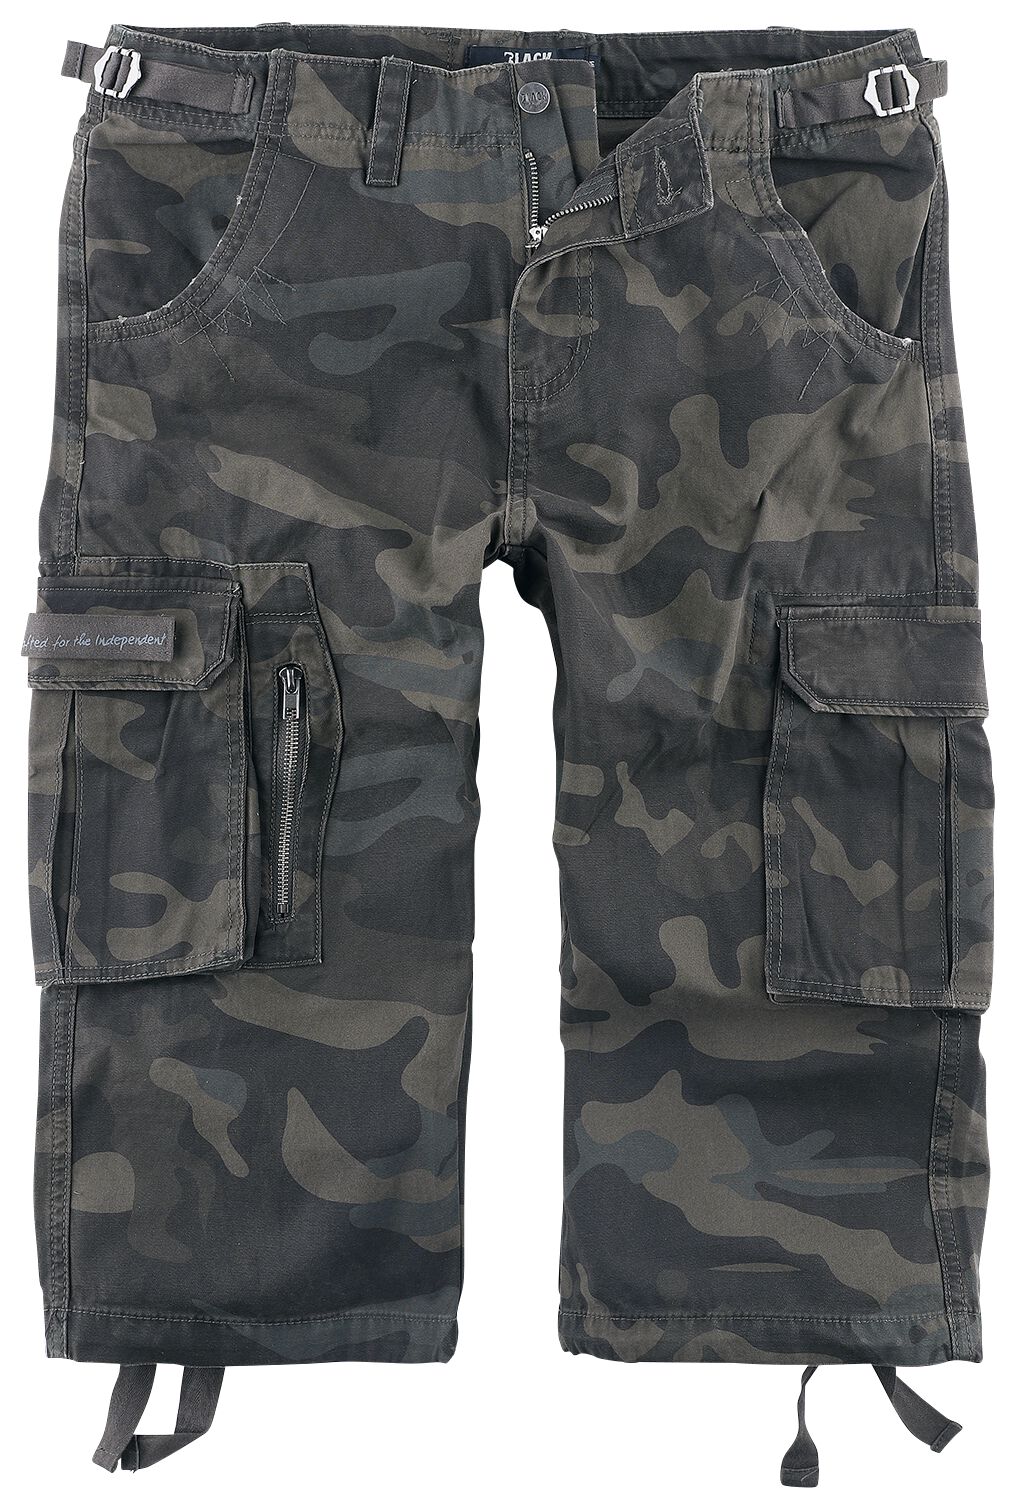 Black Premium by EMP 3/4 Army Vintage Shorts Short darkcamo in M